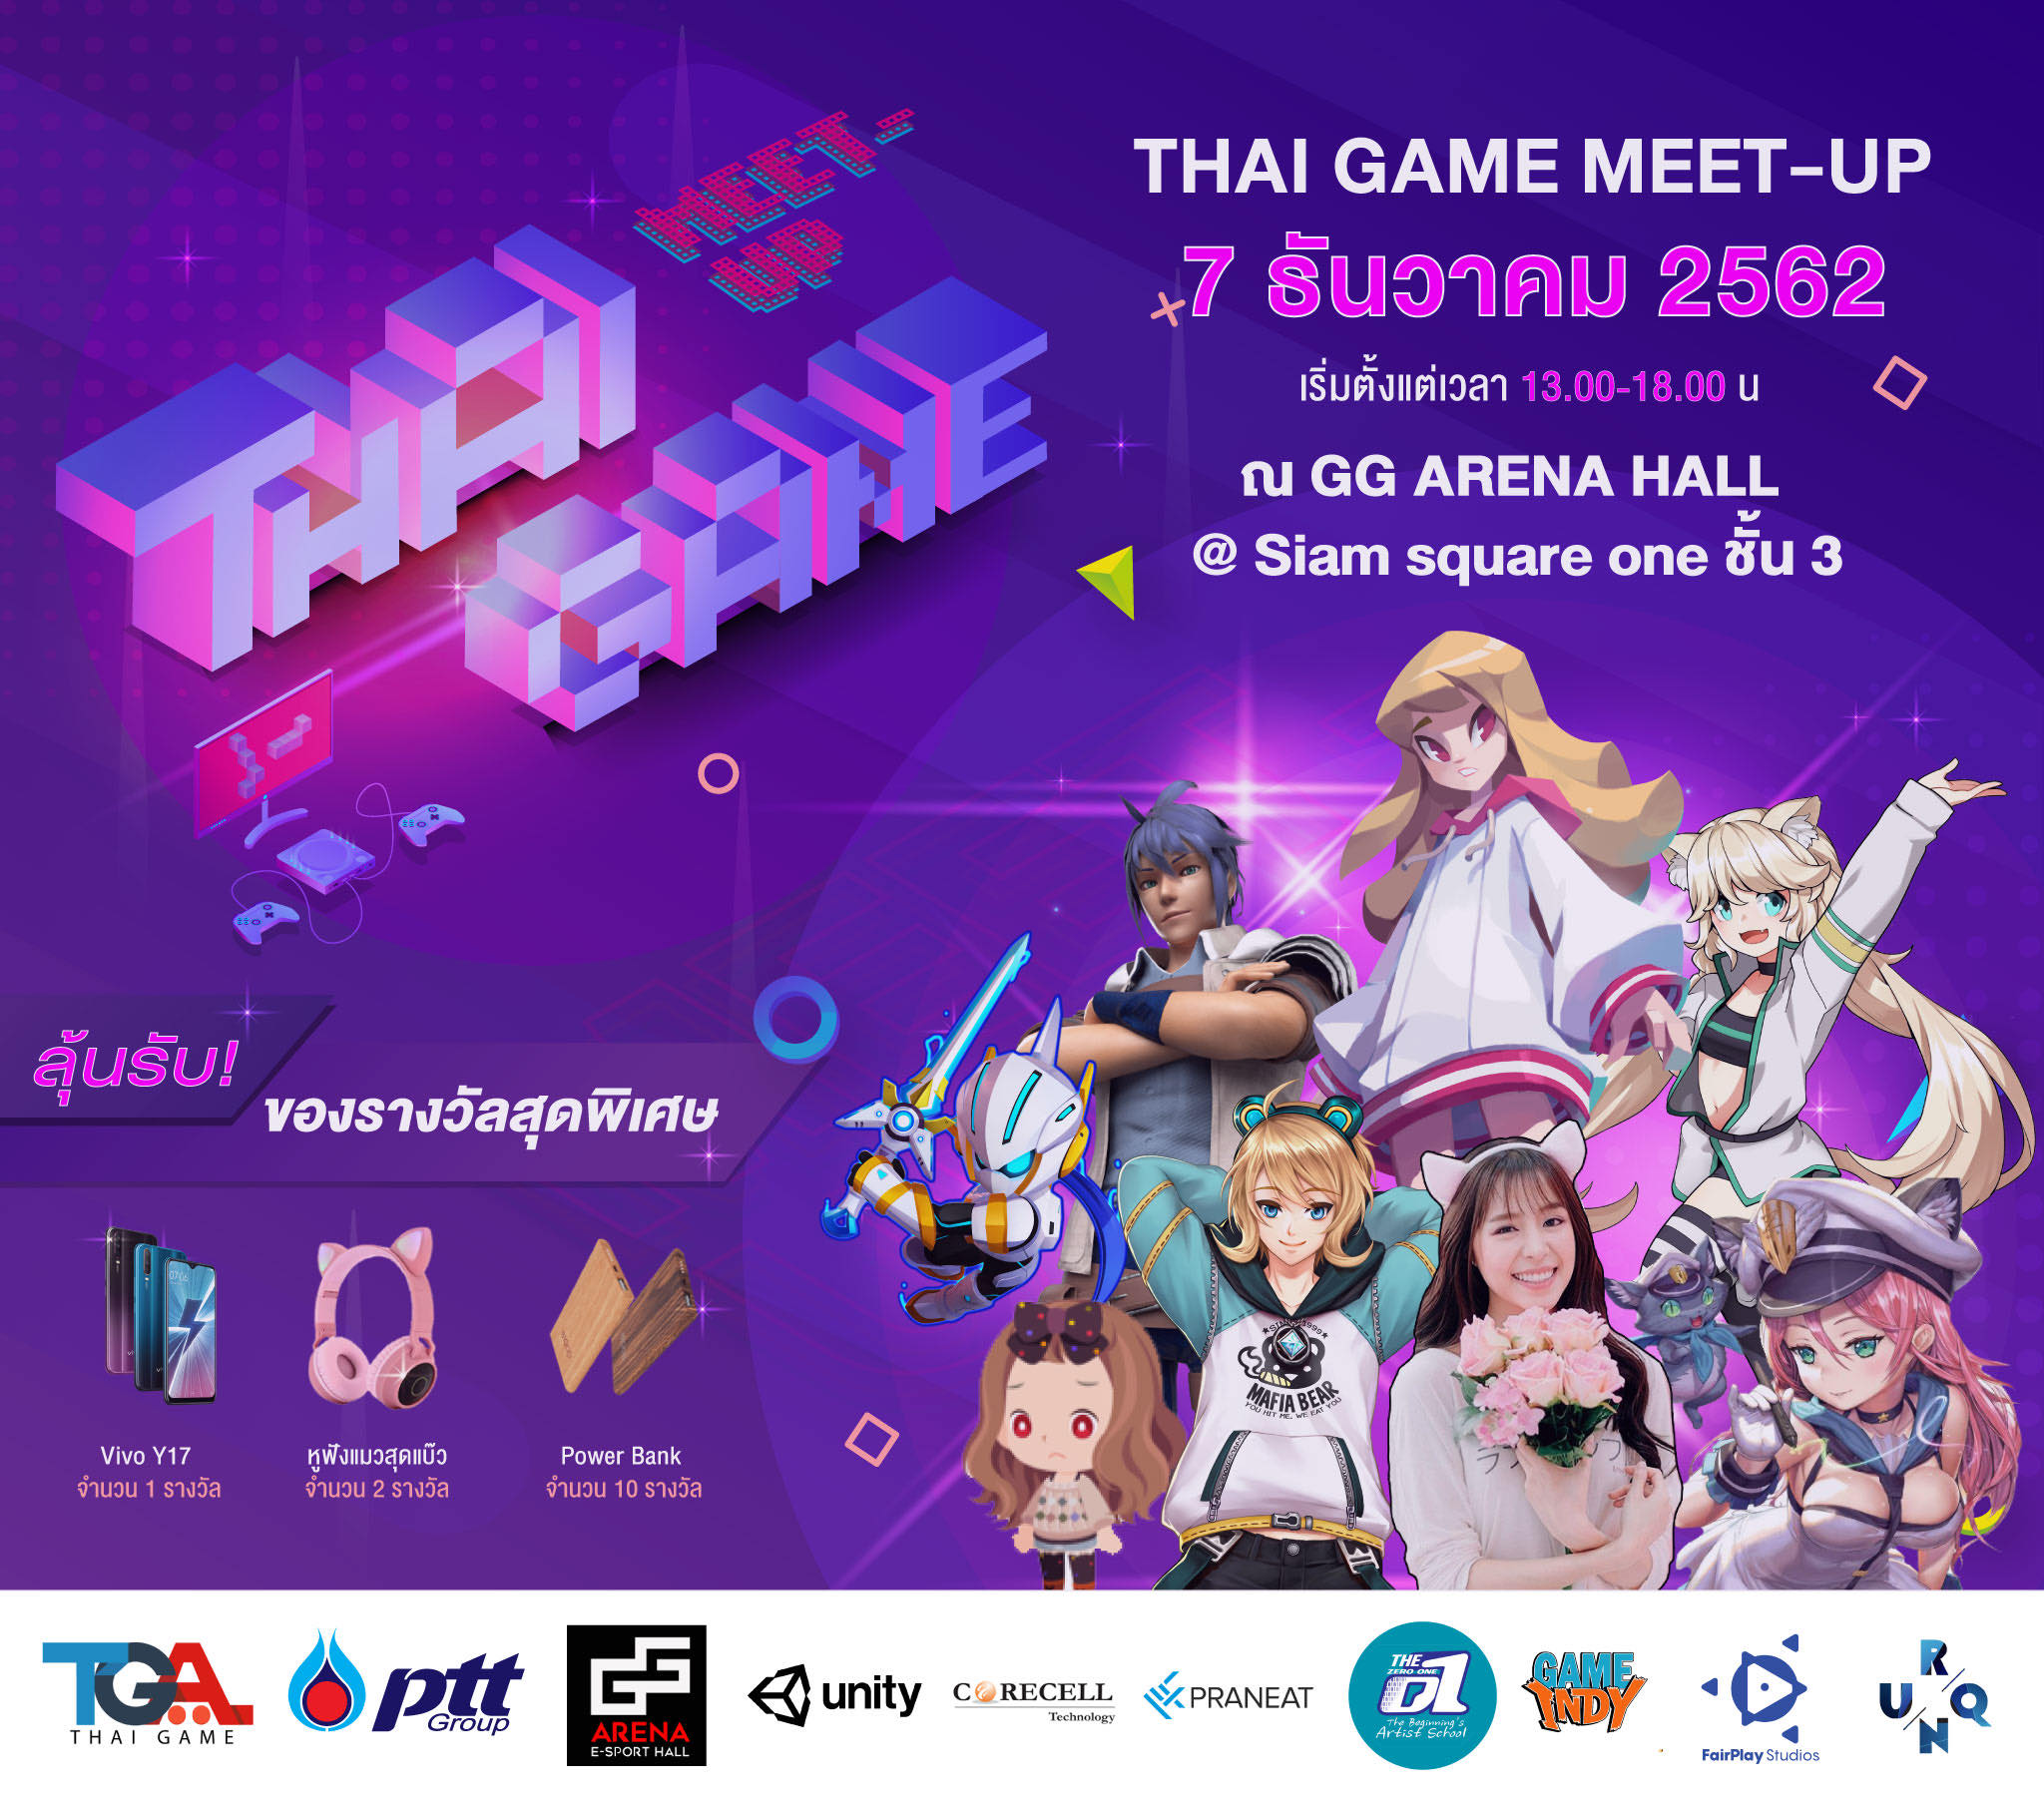 THAI GAME MEET-UP 2  รวมตัวเหล่าคนรักเกมไทยครั้งที่ 2